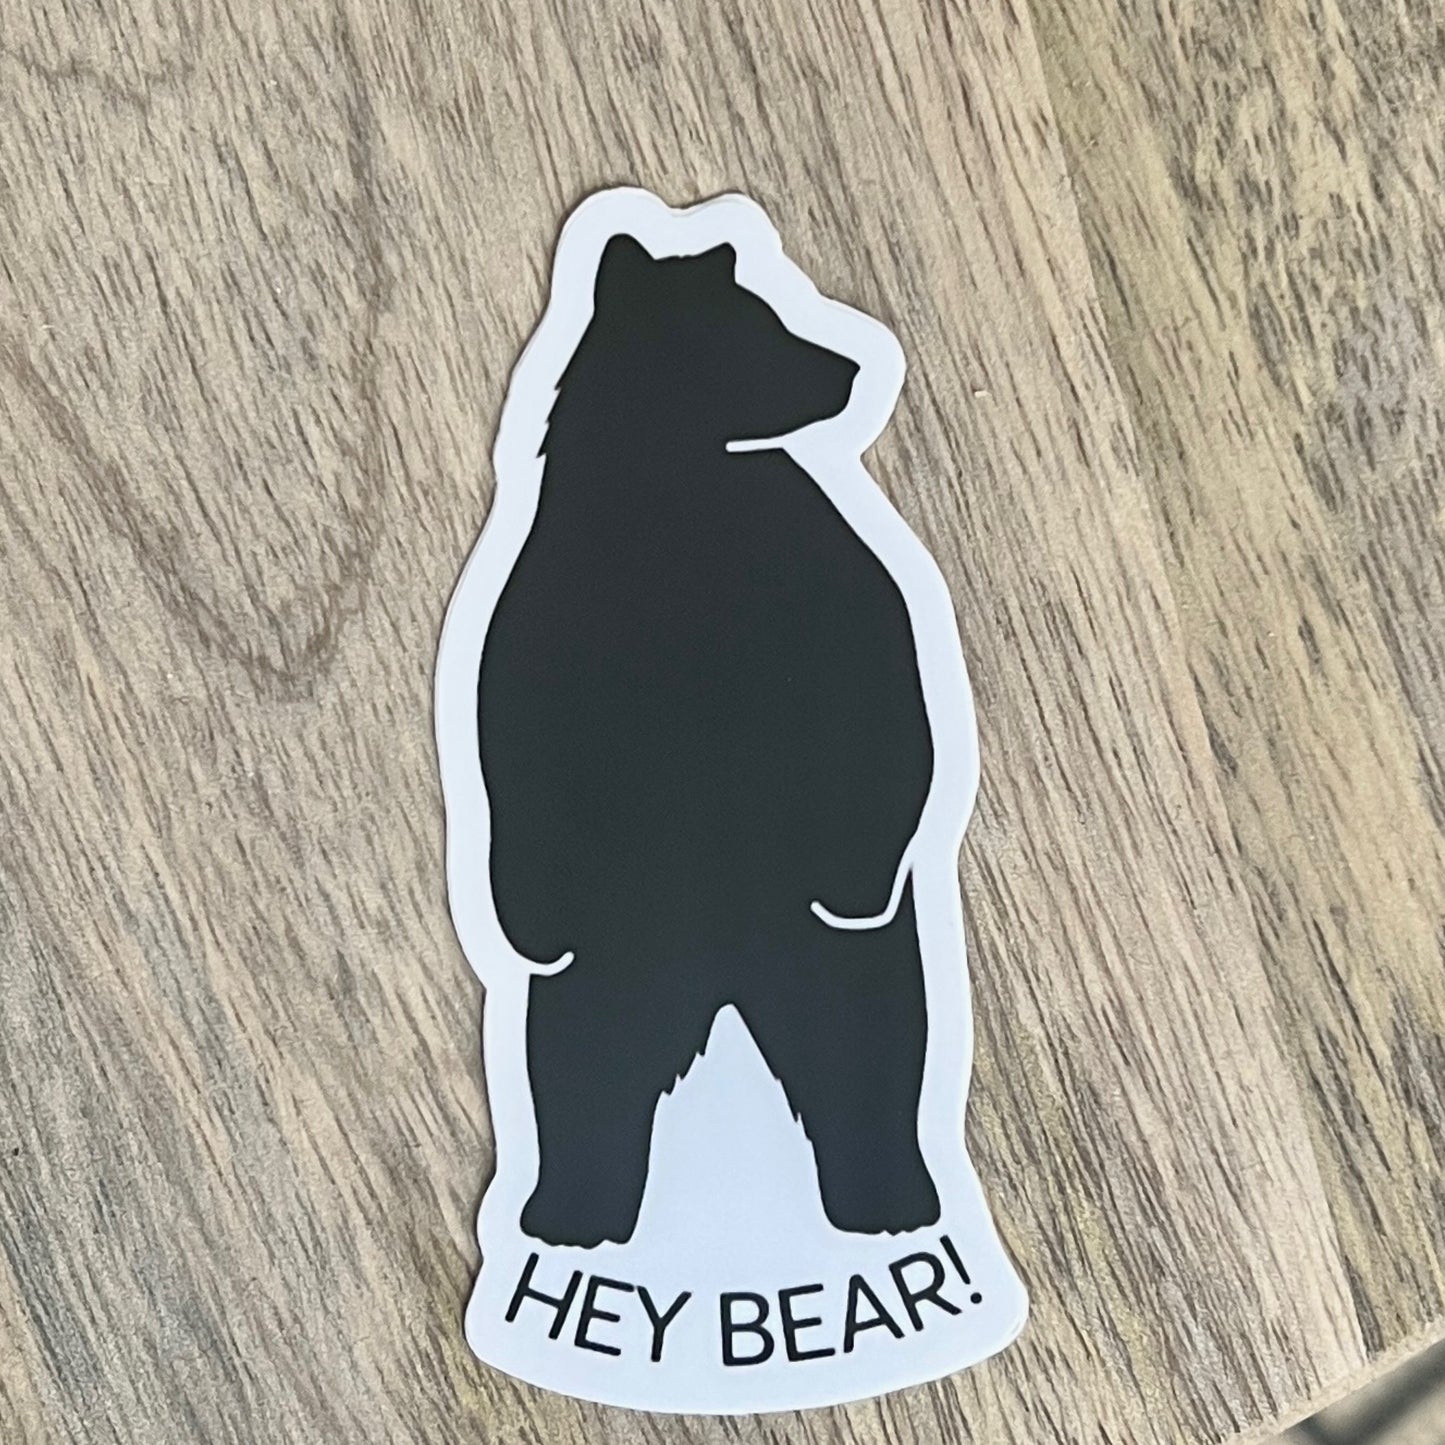 Hey Bear! sticker